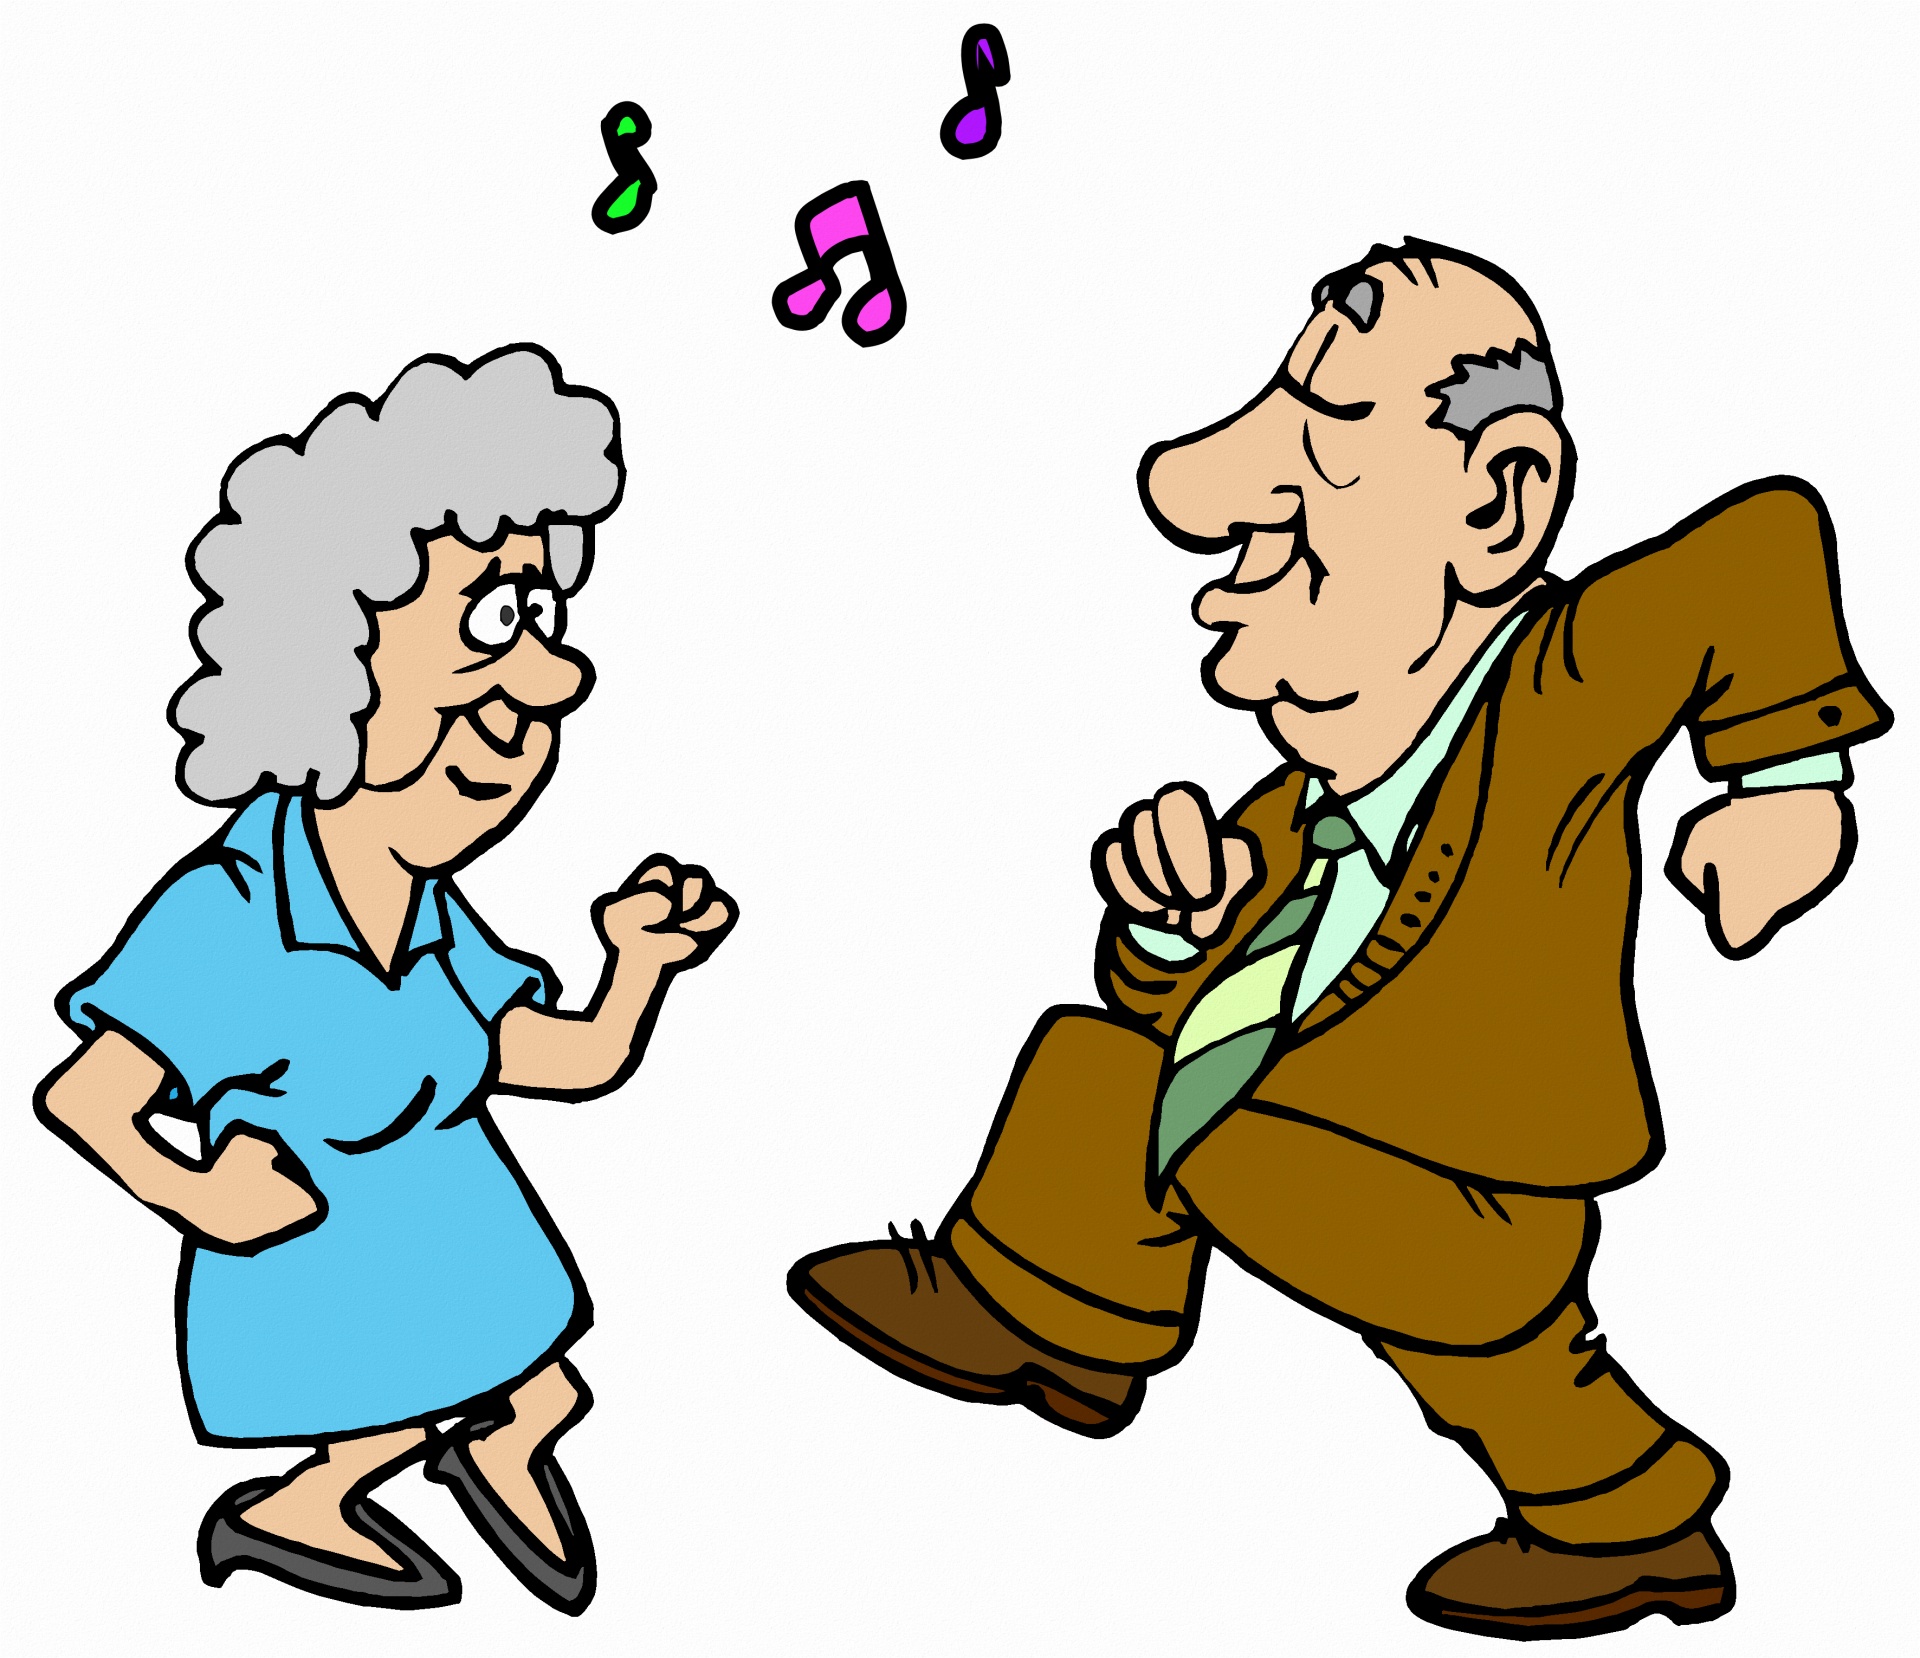 Fun,laugh,cartoon,elderly,dancing - free image from needpix.com